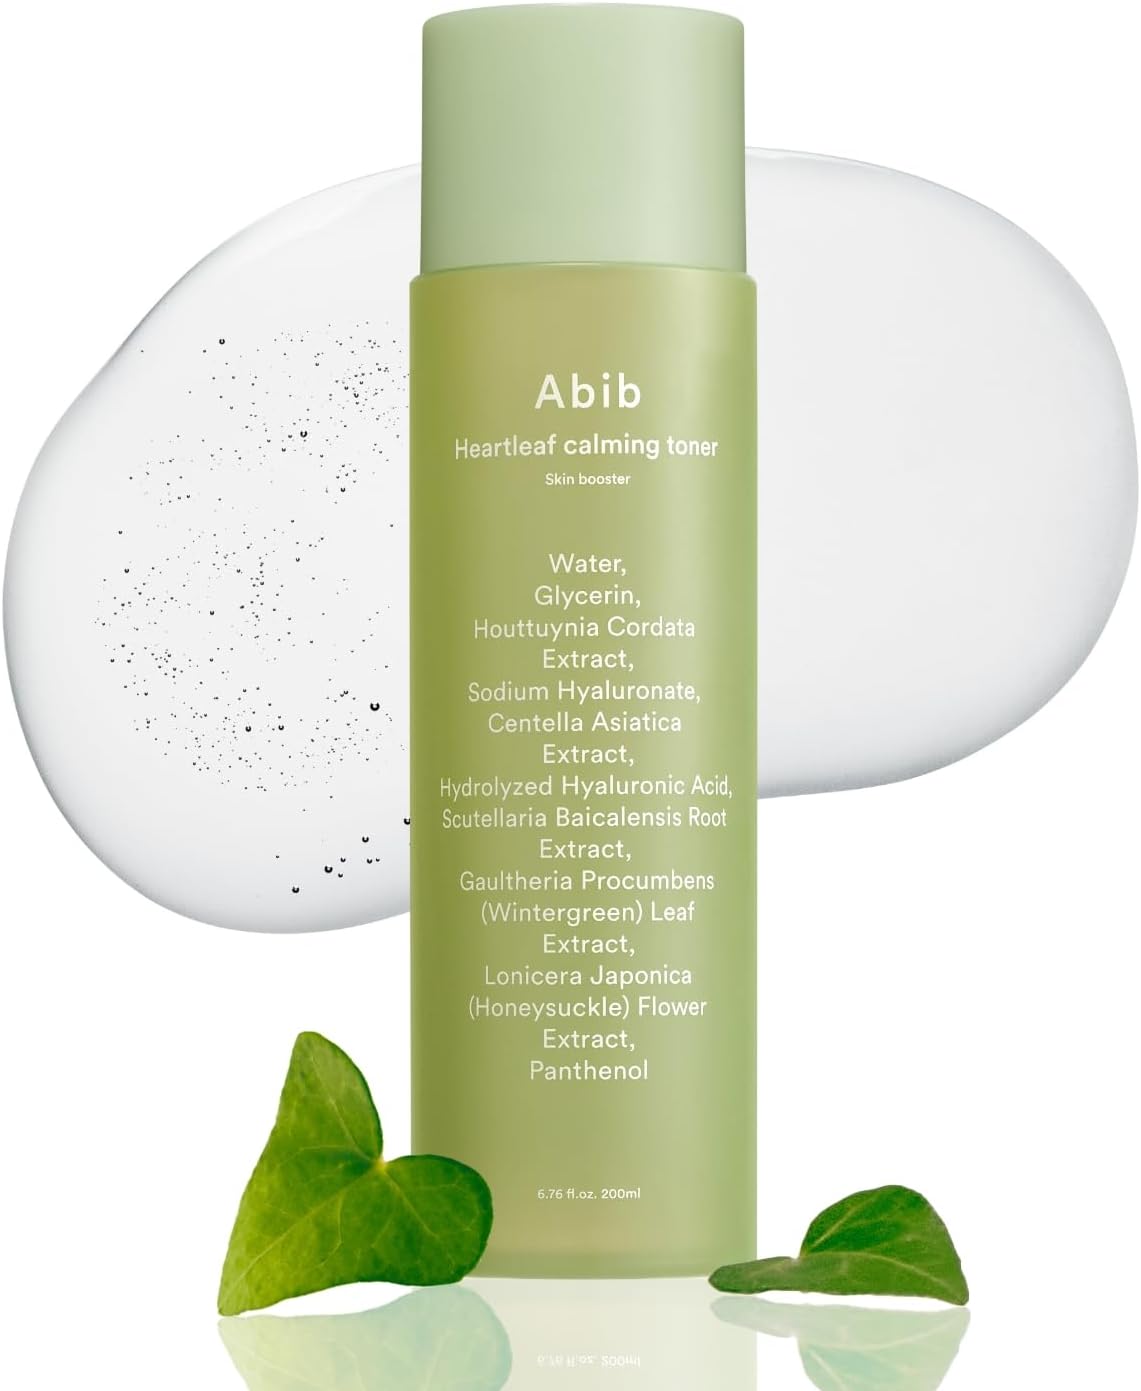 Abib Heartleaf Calming Toner Skin Booster 7.1 fl oz / 210ml I Toner for Senstive Skin, Irritated Skin, Instant Relief for Acne